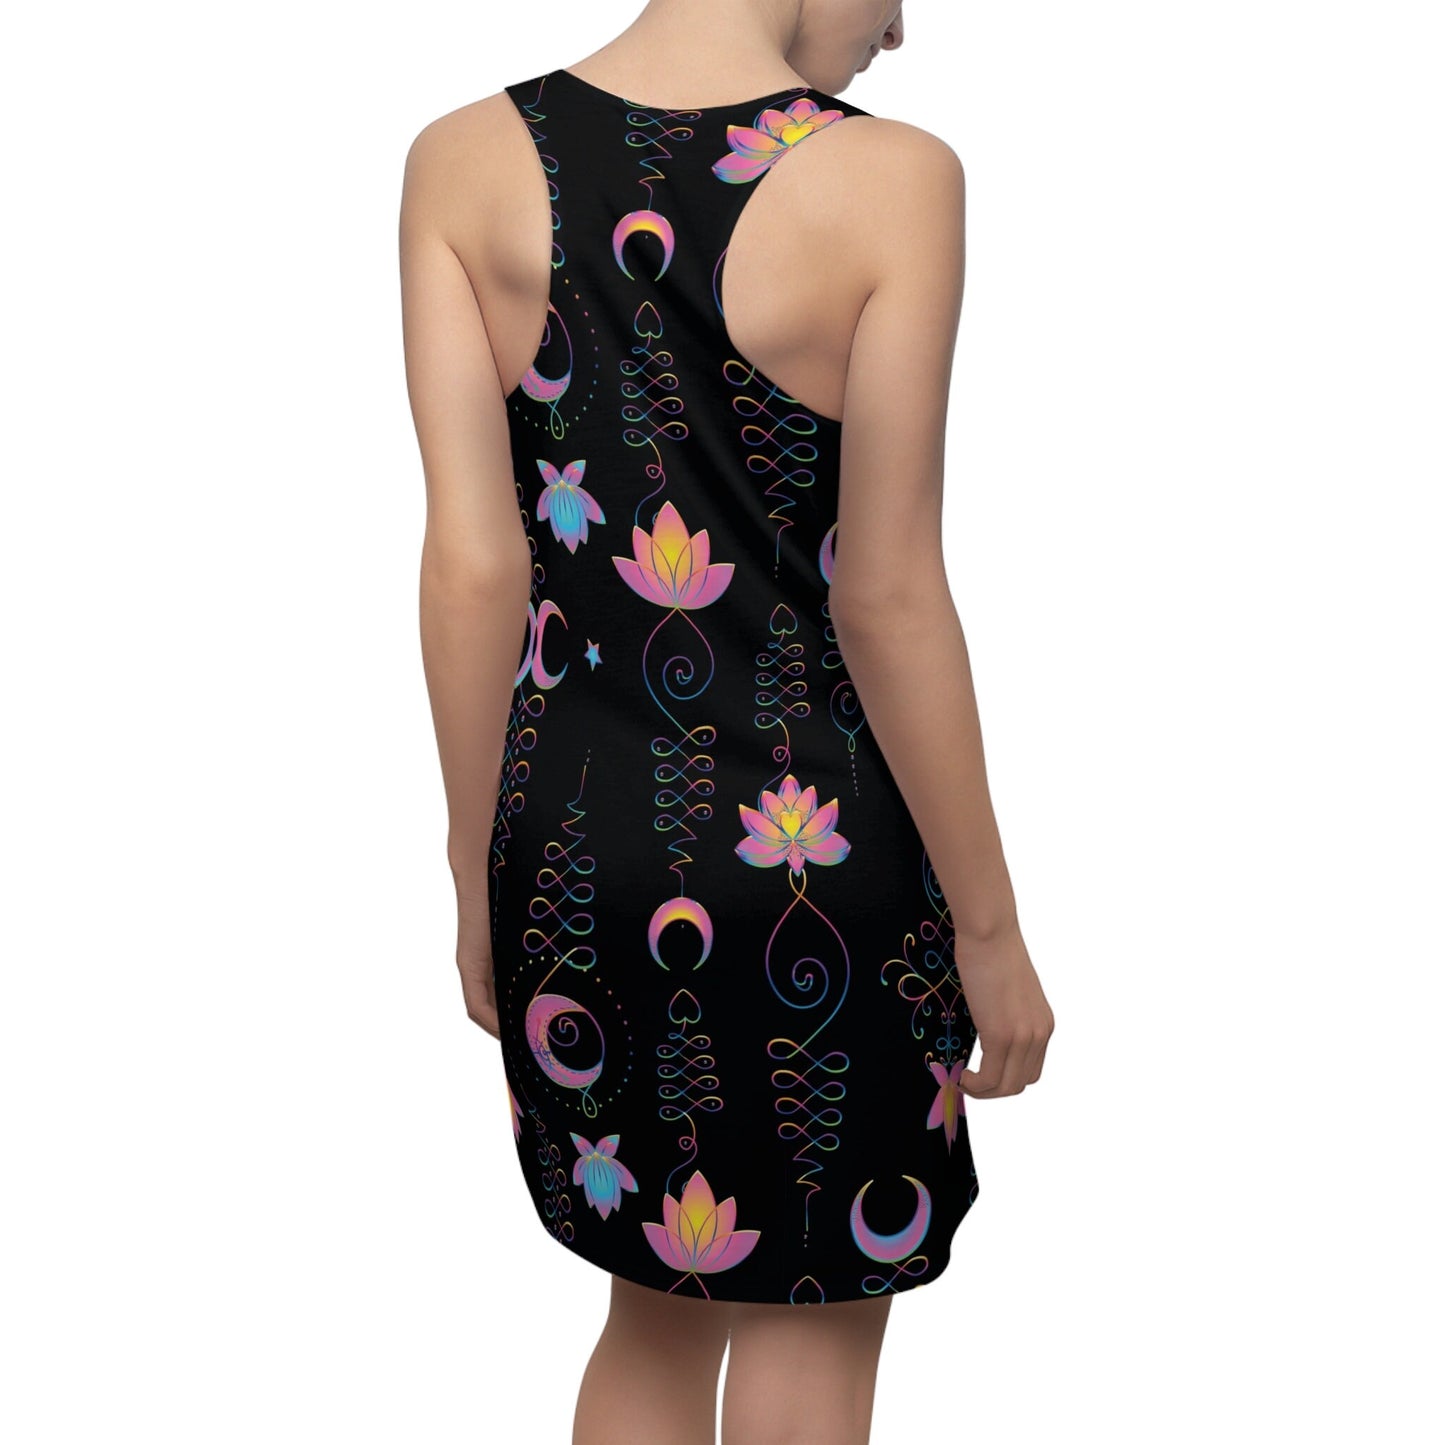 Unalome Lotus Flower Dress black pink sleeveless racerback dress